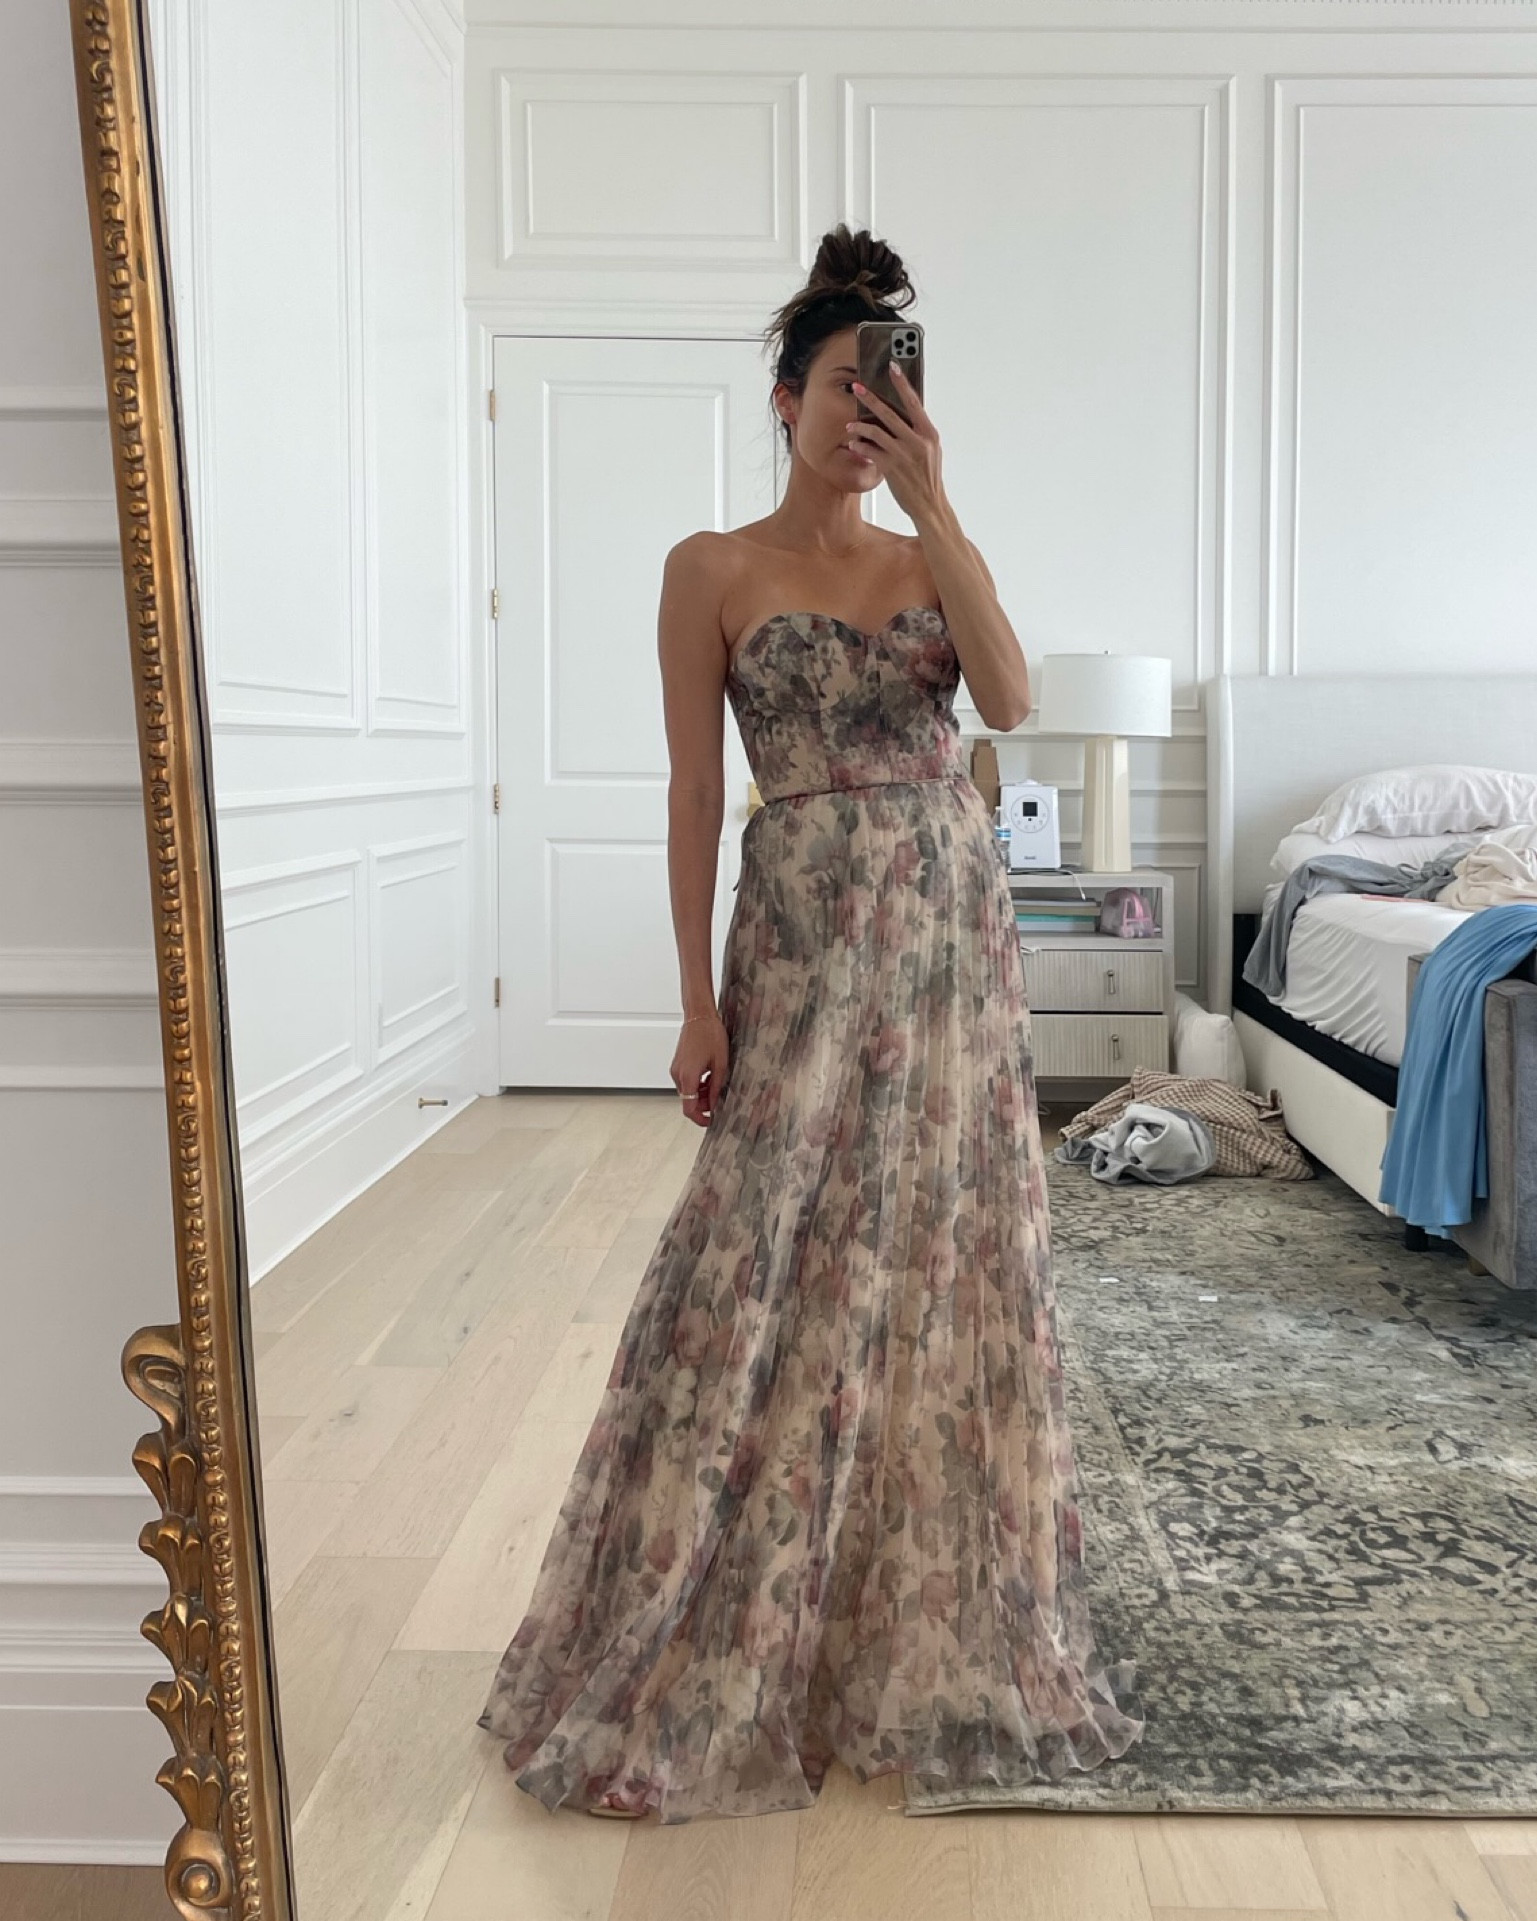 long floral dresses for wedding